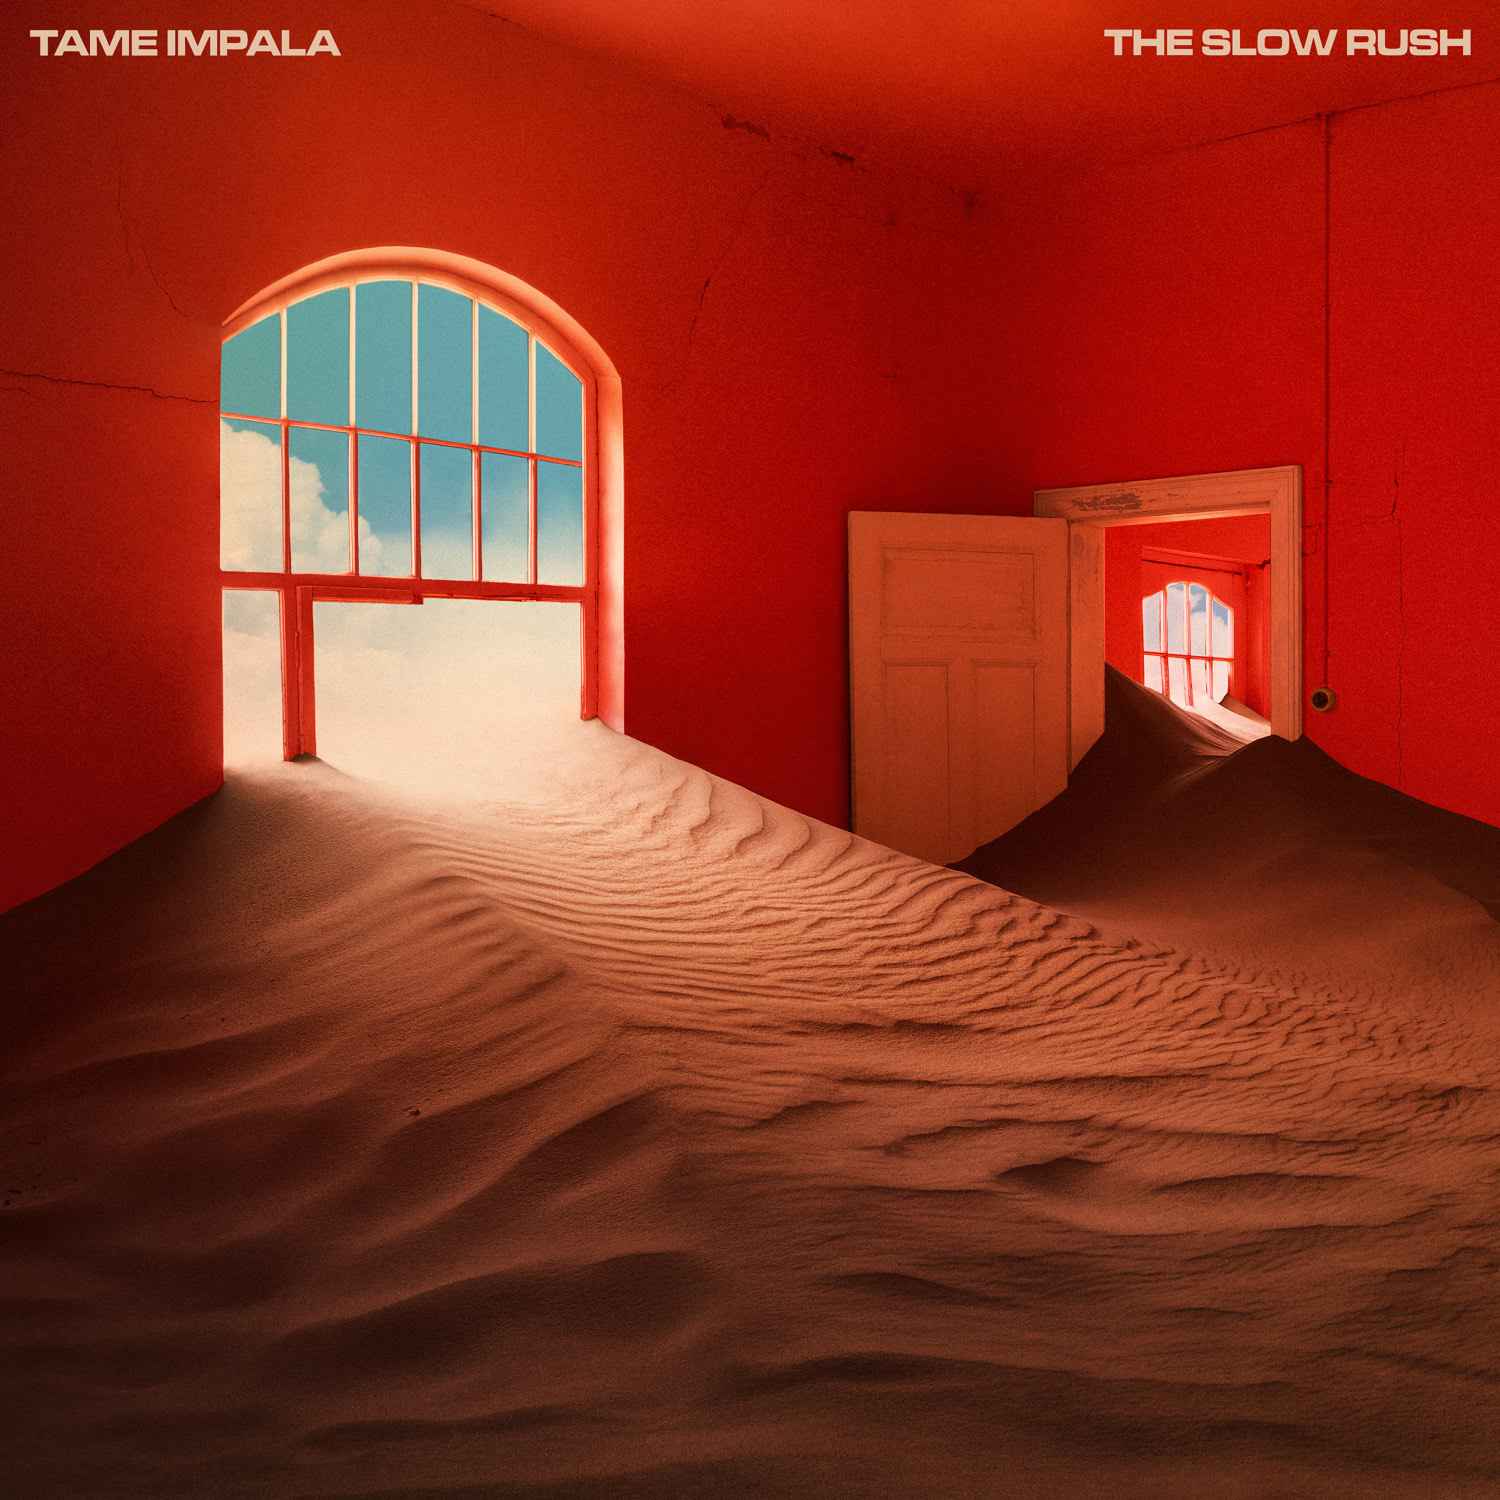 Tame Impala - On Track(2020)